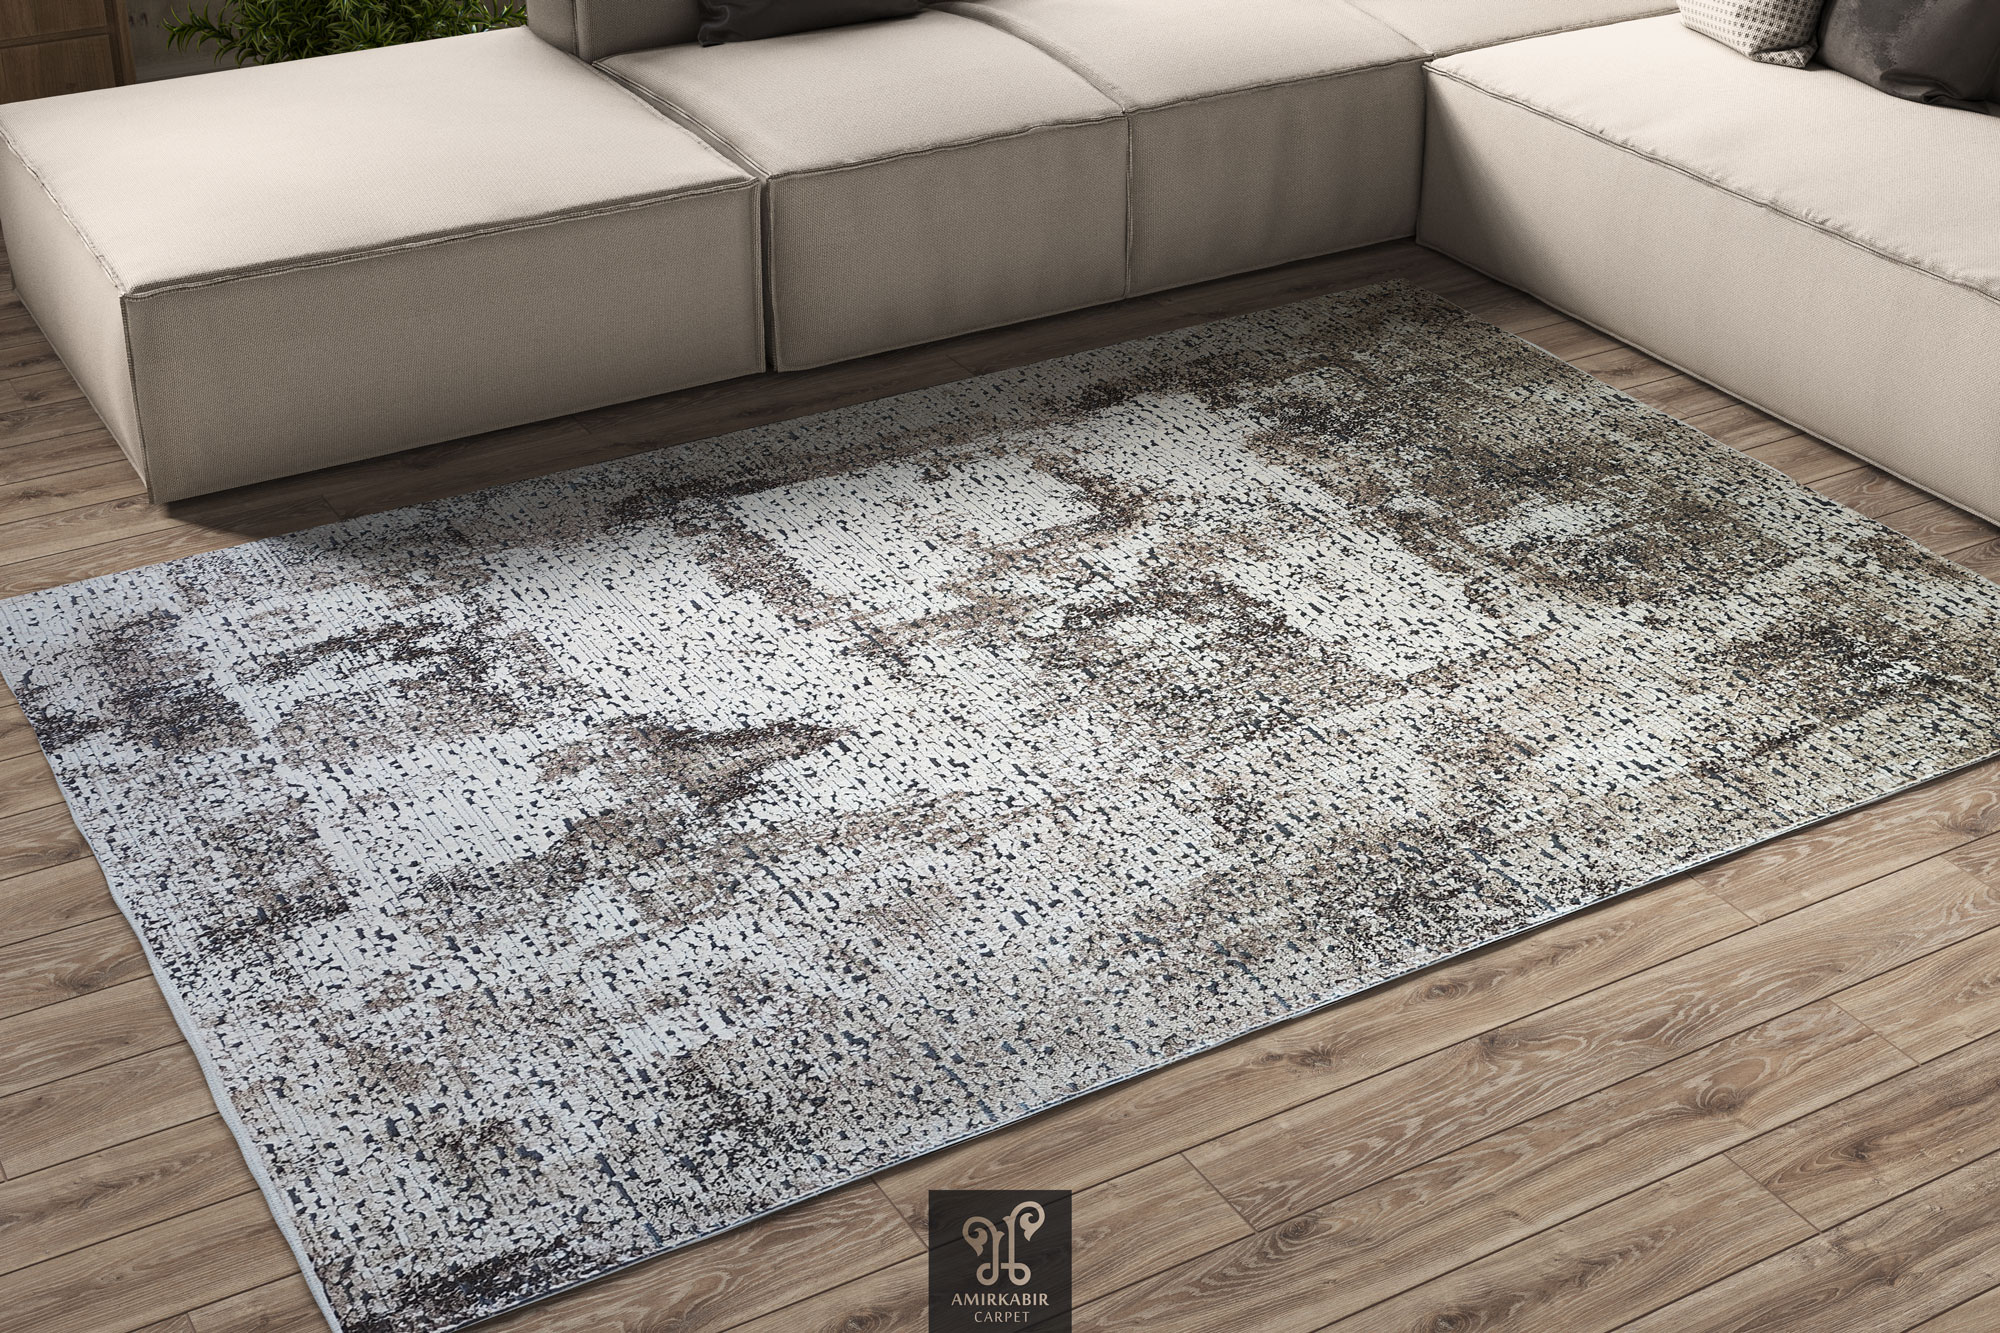 Vintage 400 reeds carpet -1300 Density RUG - Modern Carpet - Harmony Carpet 1113 carpet code